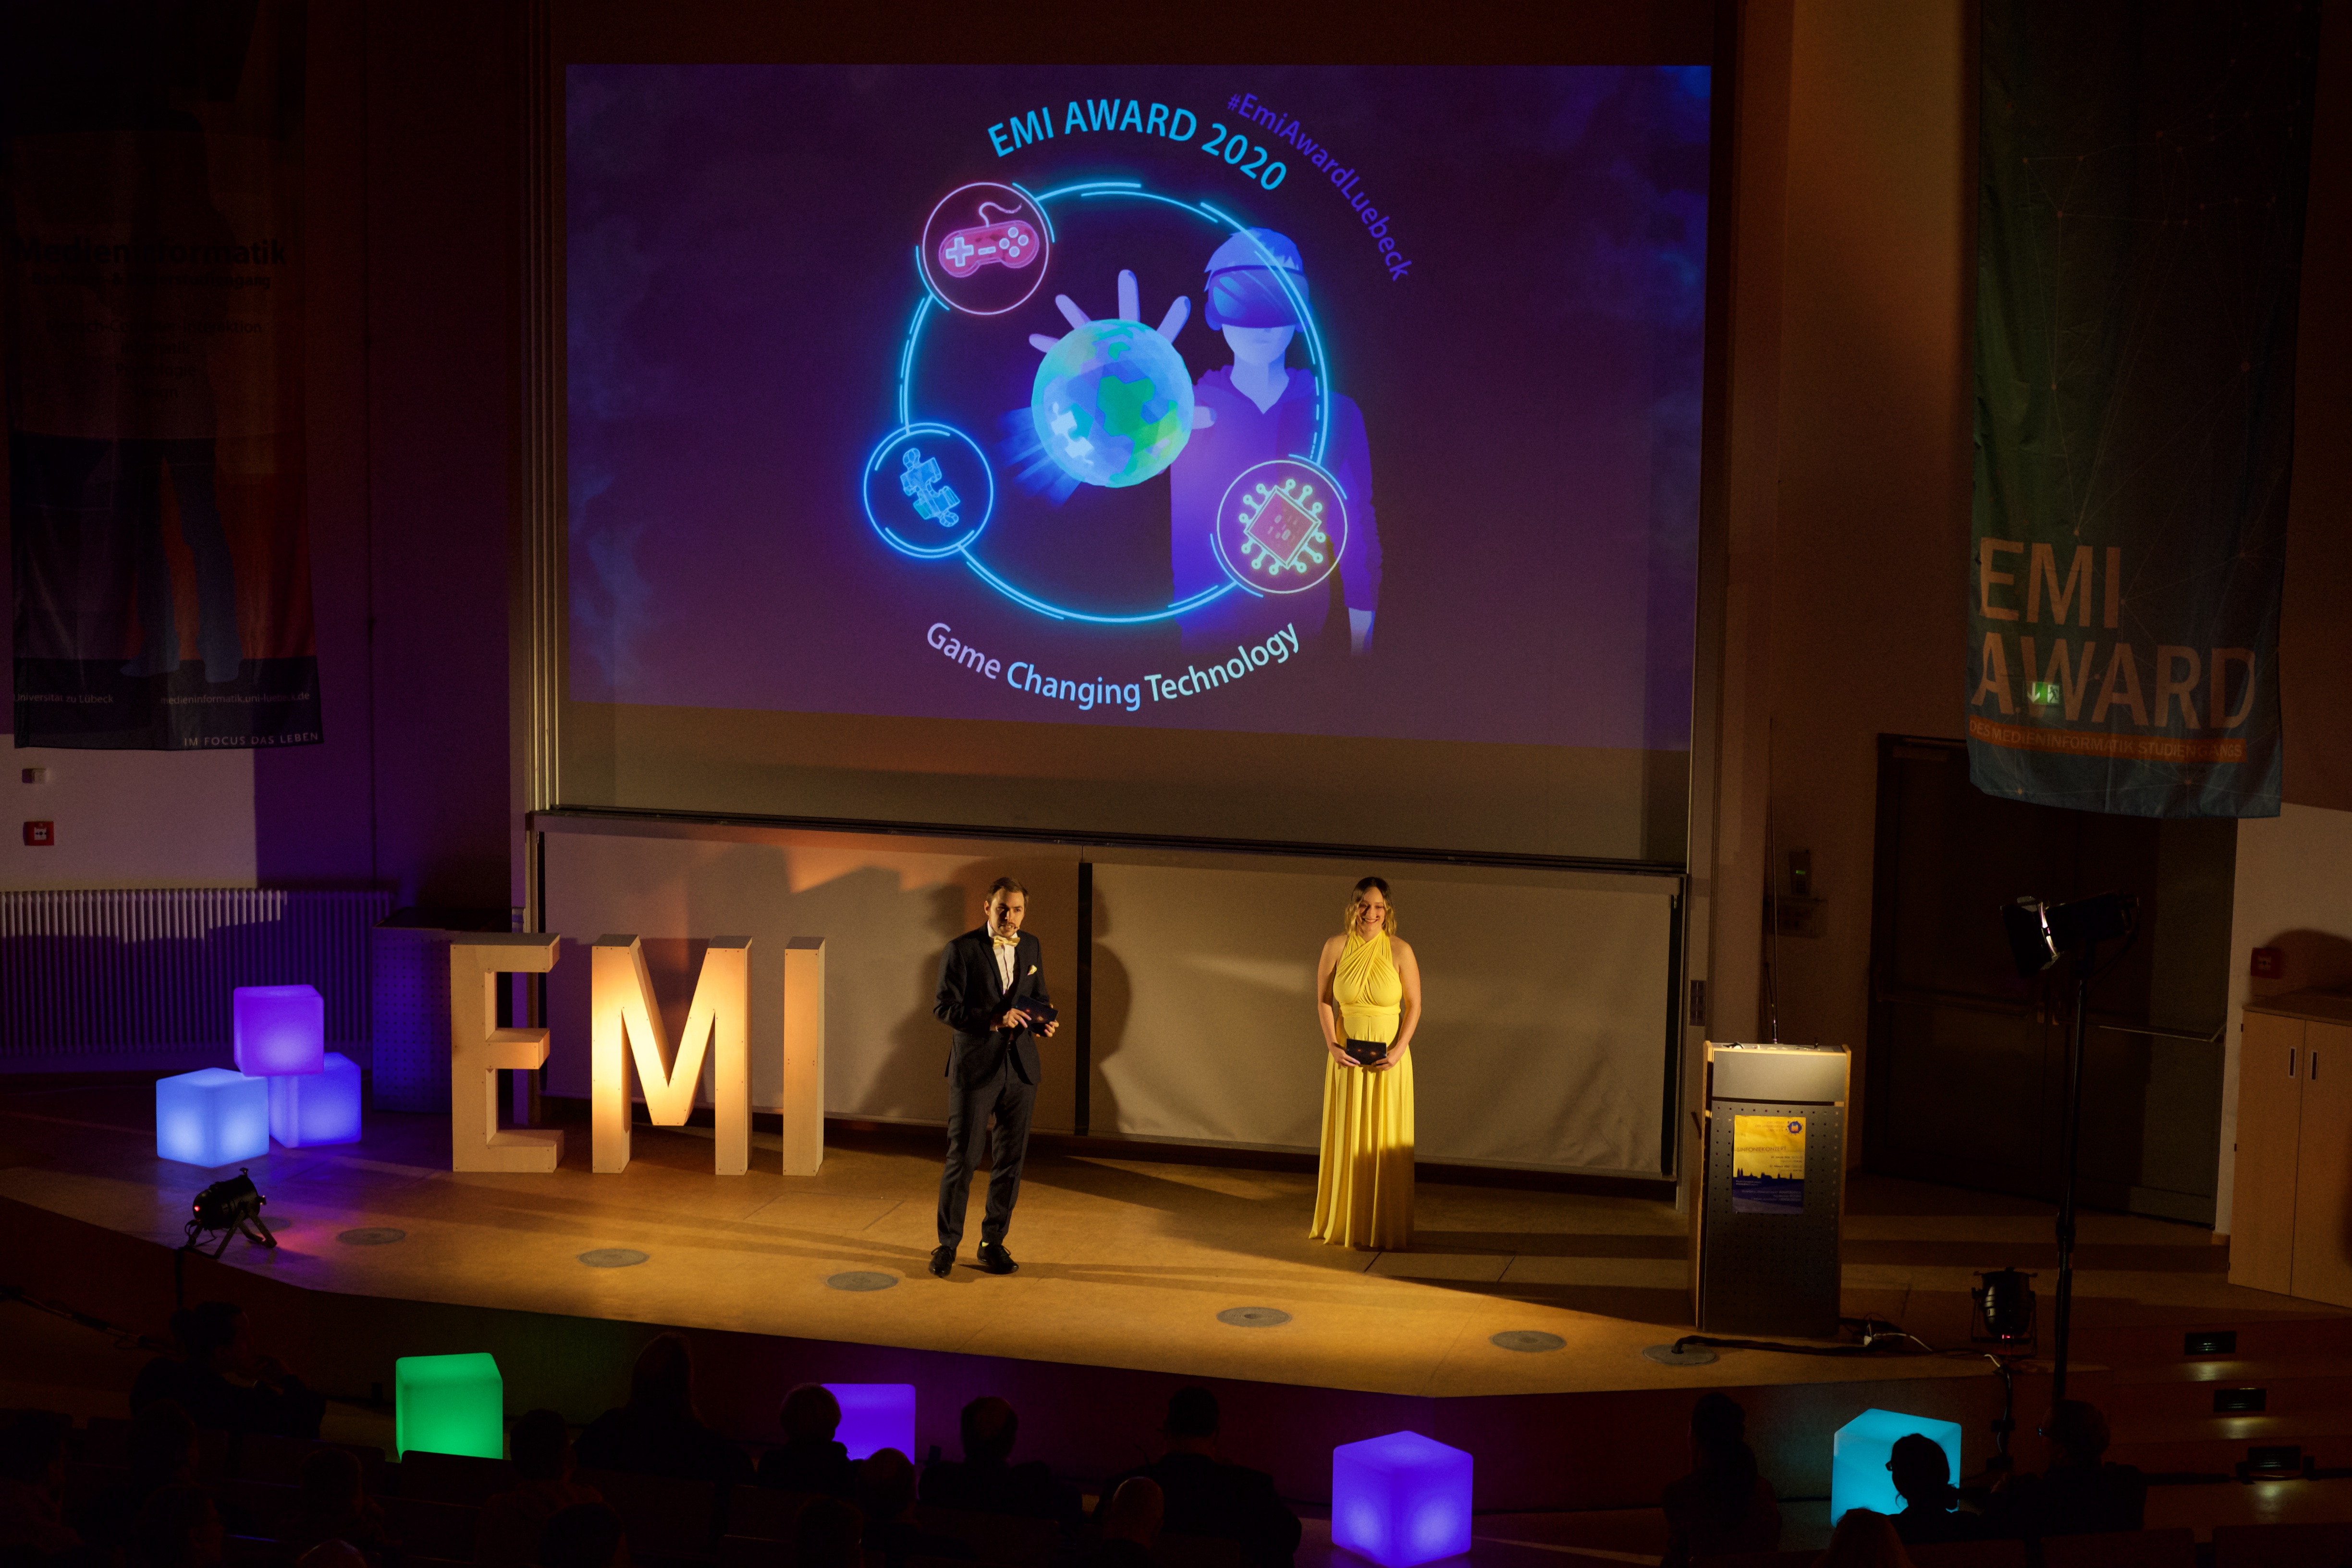 Eröffnung des EMI Awards im AM1